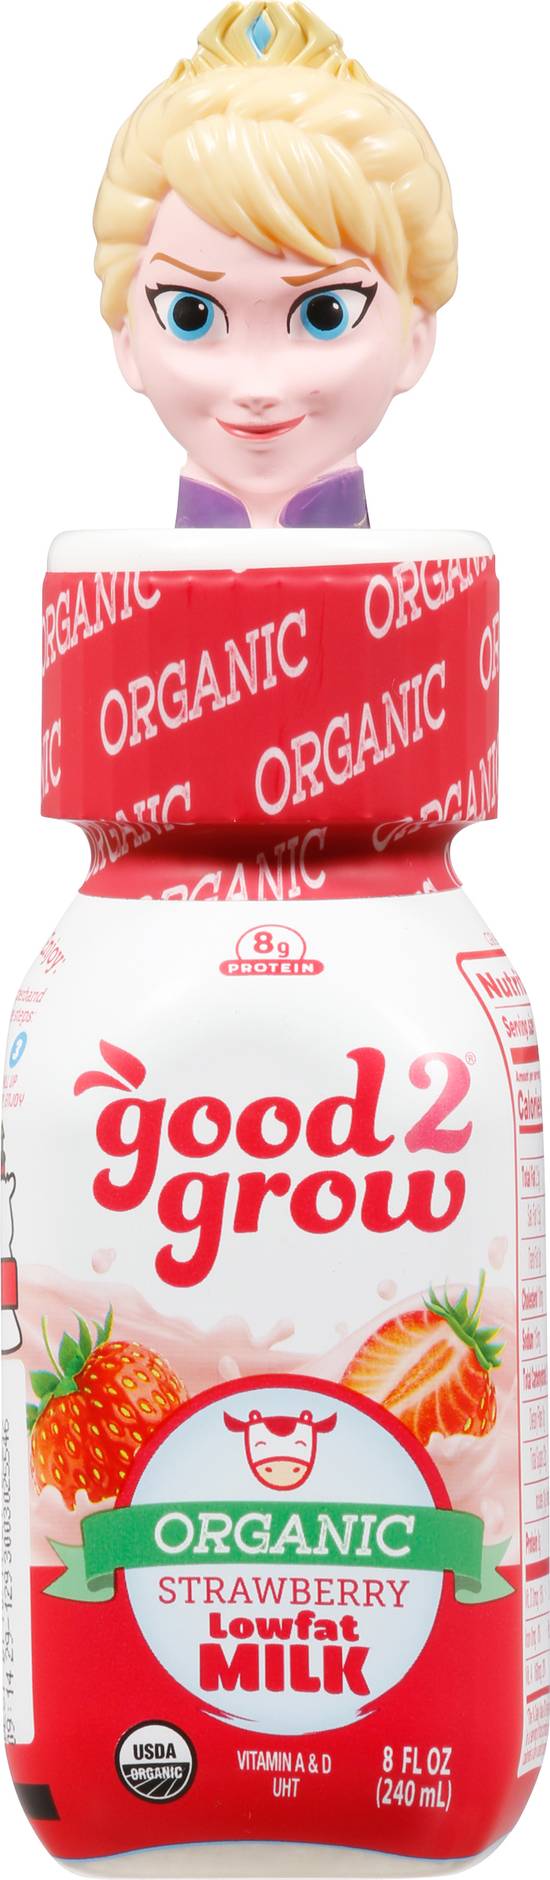 Good2grow Organic Lowfat Milk (8 fl oz) (strawberry)